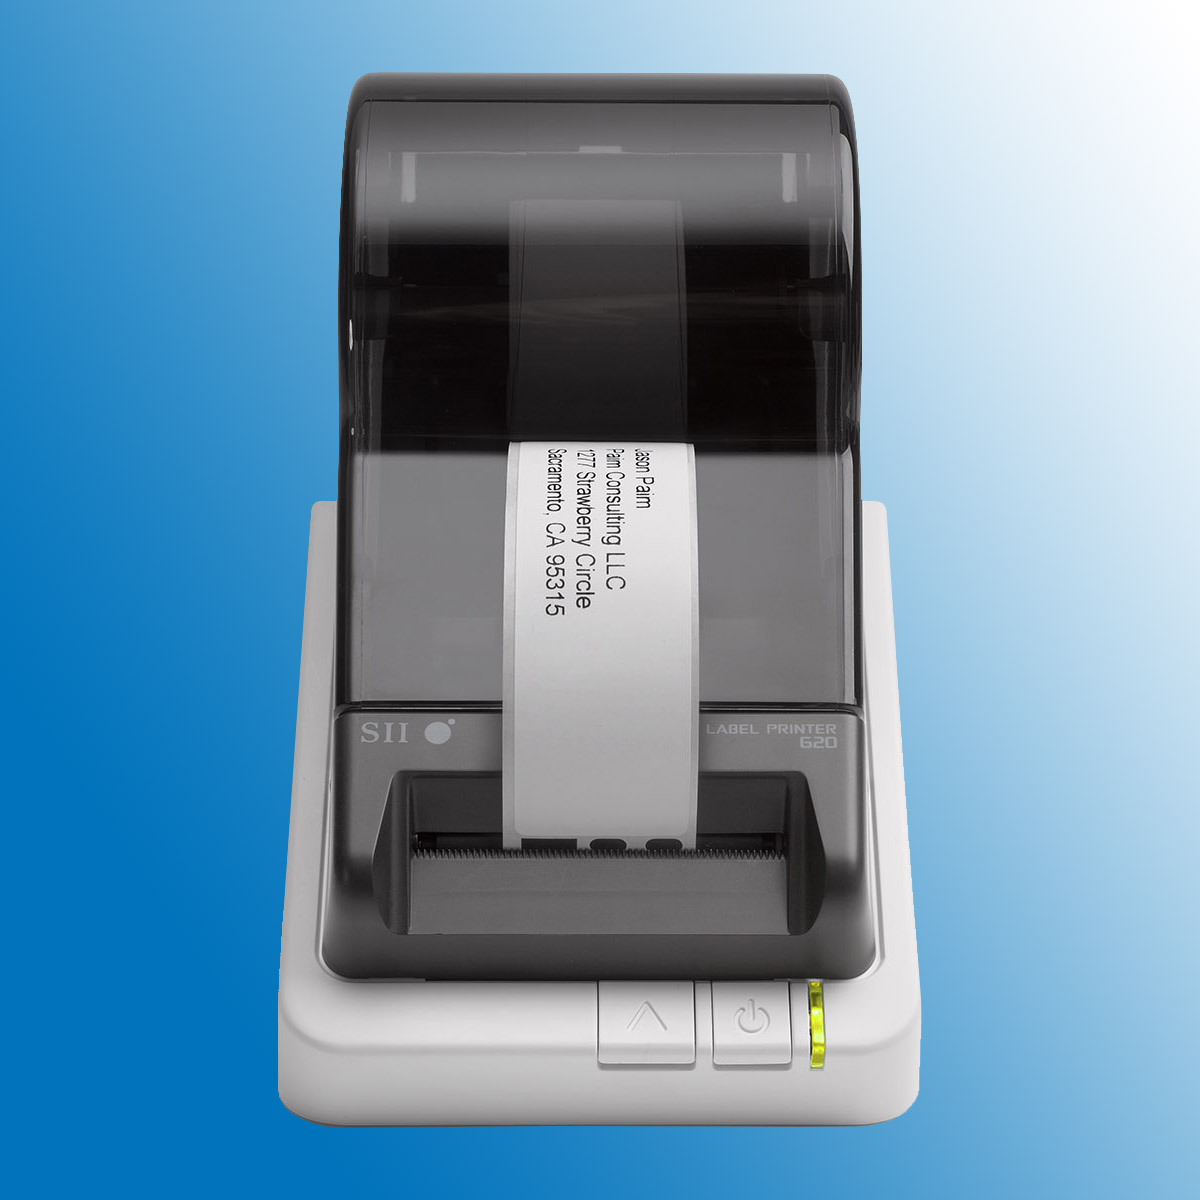 Sii Smart Label Printer 650 Driver